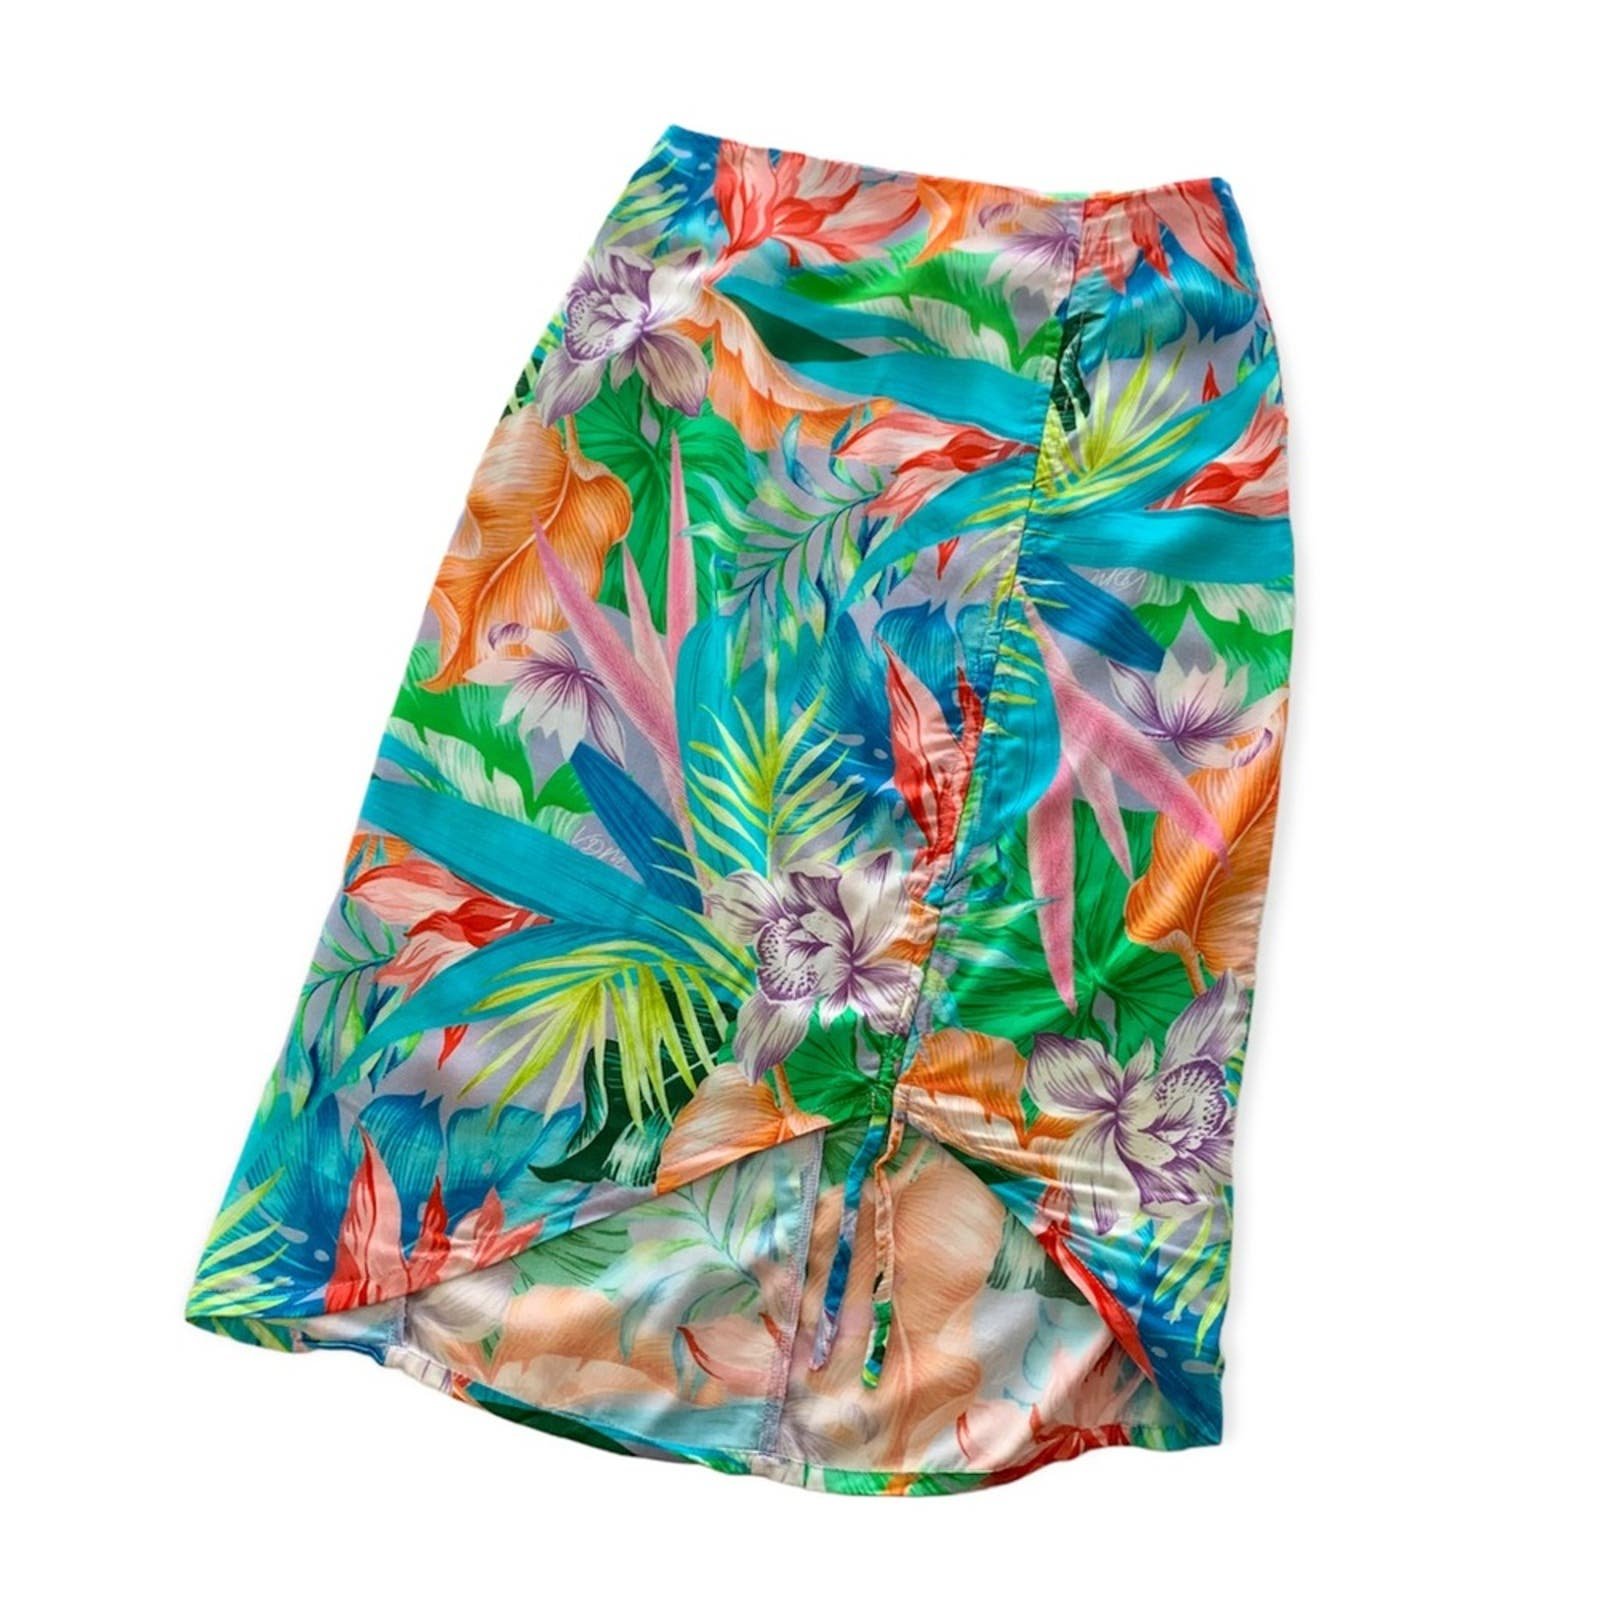 save up to 70% VDM The Label Revolve Stassie Multicolor Tropical Floral Print Skirt XS oUogeFHUS Online Shop